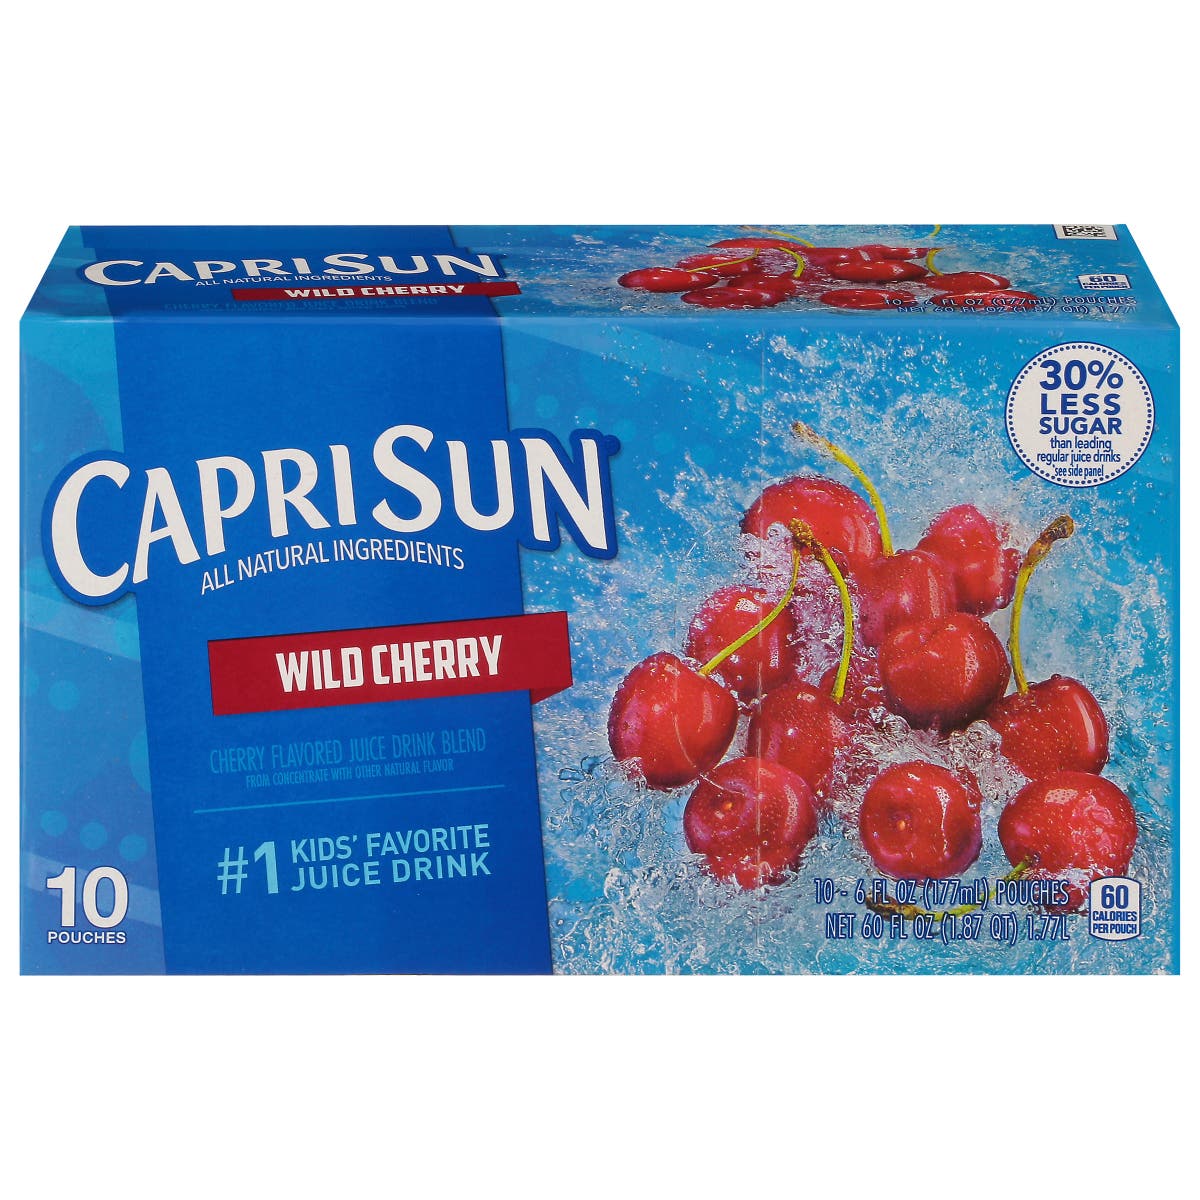 Kraft Heinz recalling contaminated Capri Sun juice pouches